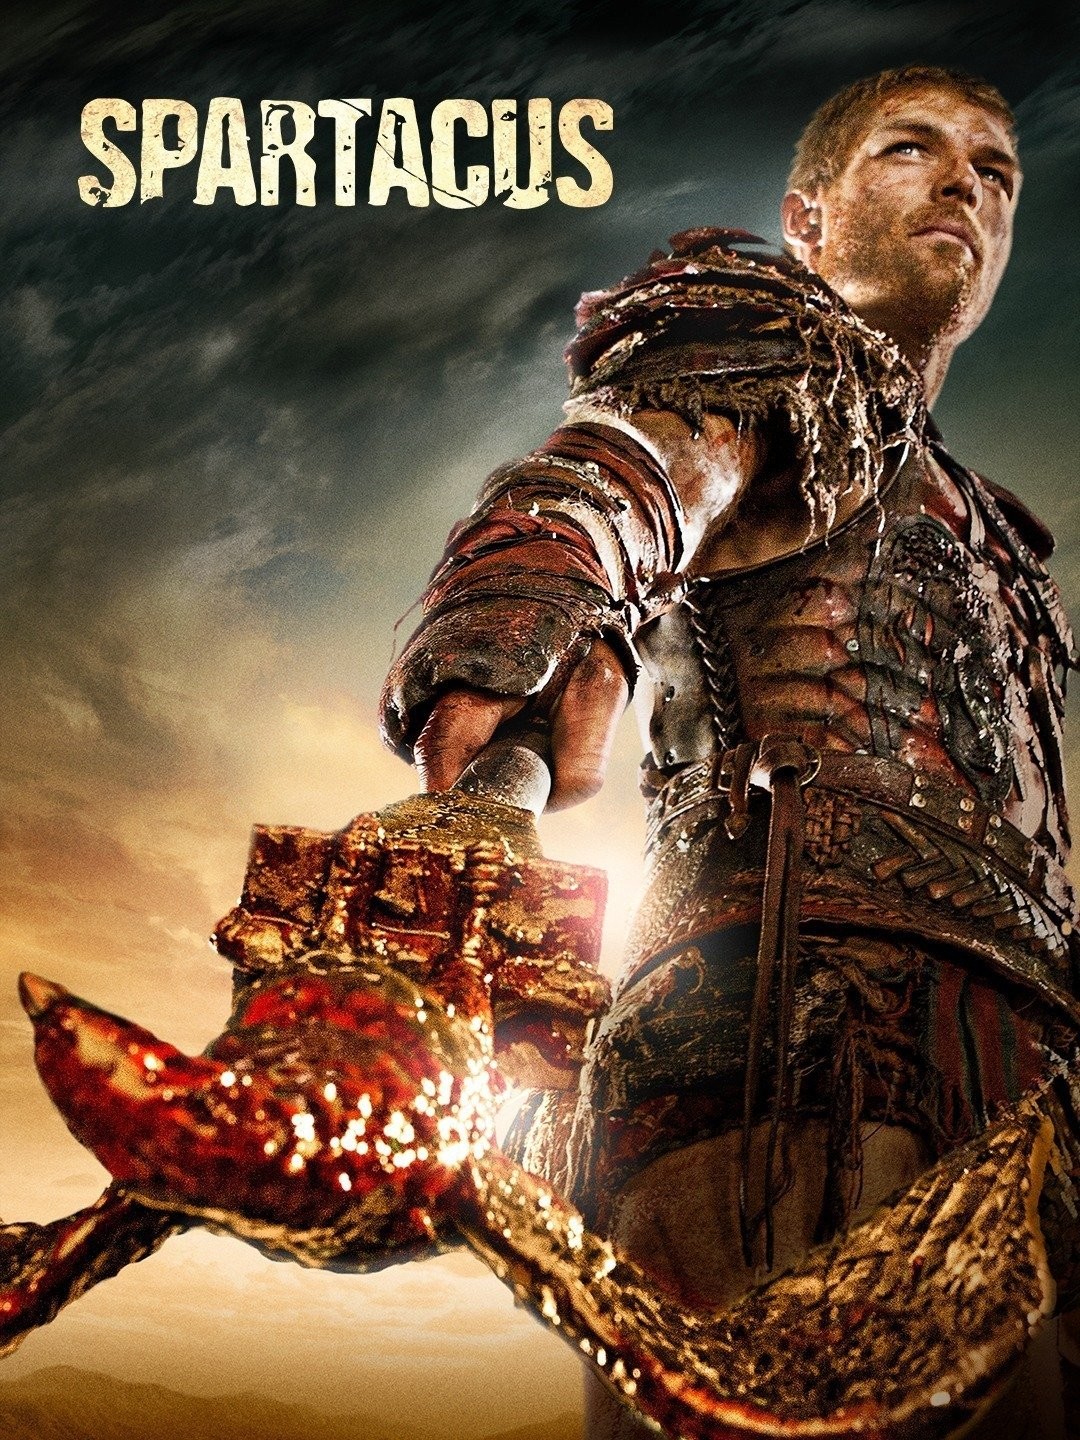 brard recommends Spartacus Season 4 Episodes